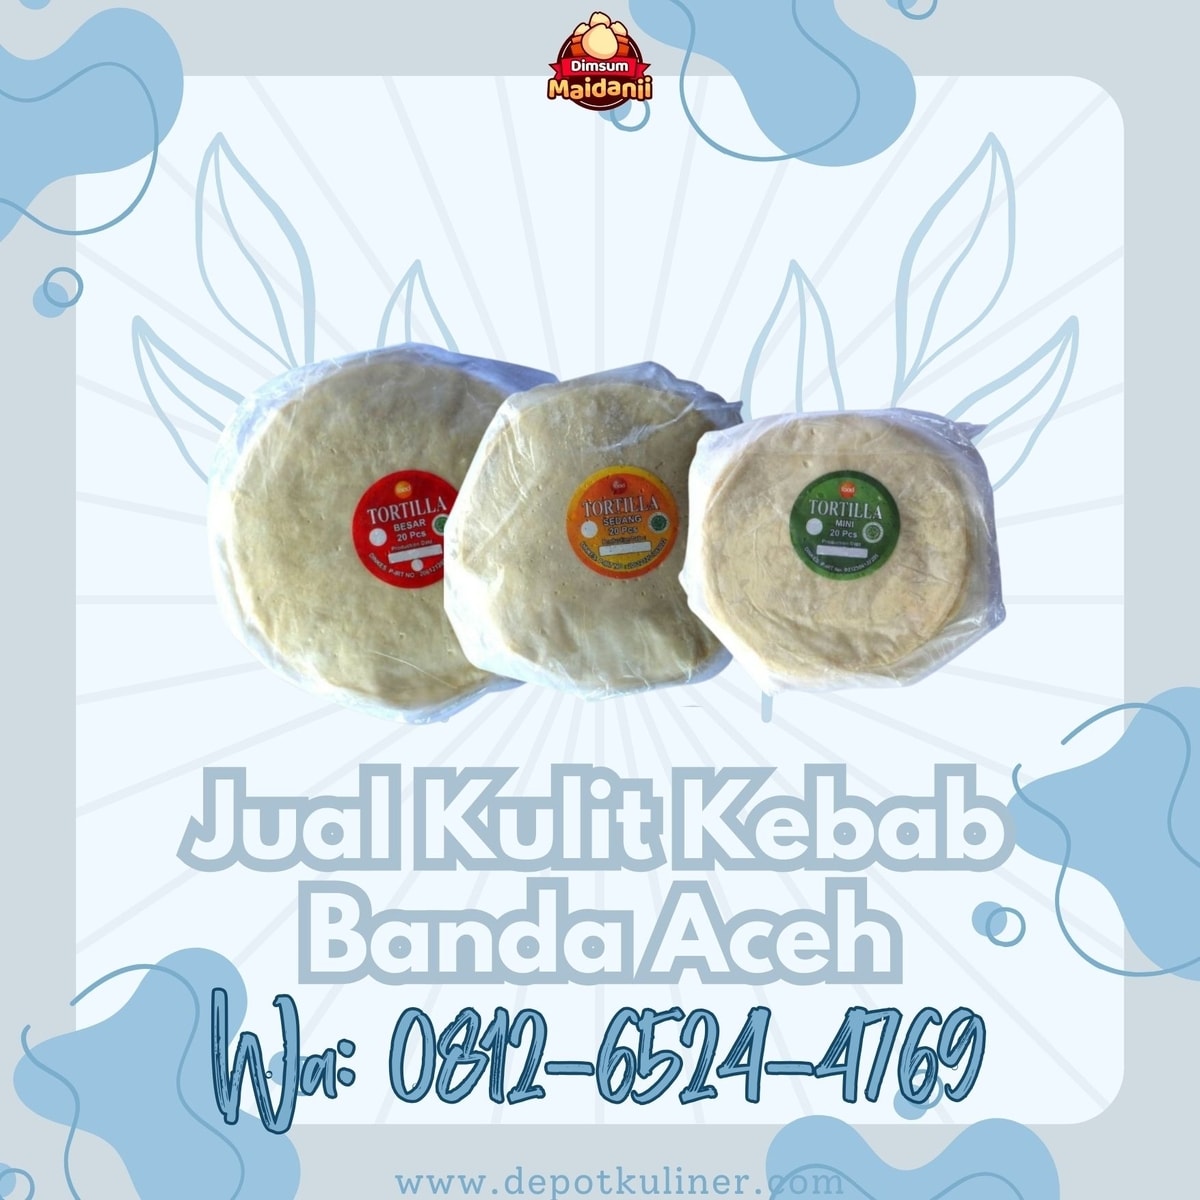 HARGA DISKON, Call 0812-6524-4769, Jual Kulit Kebab Banda Aceh